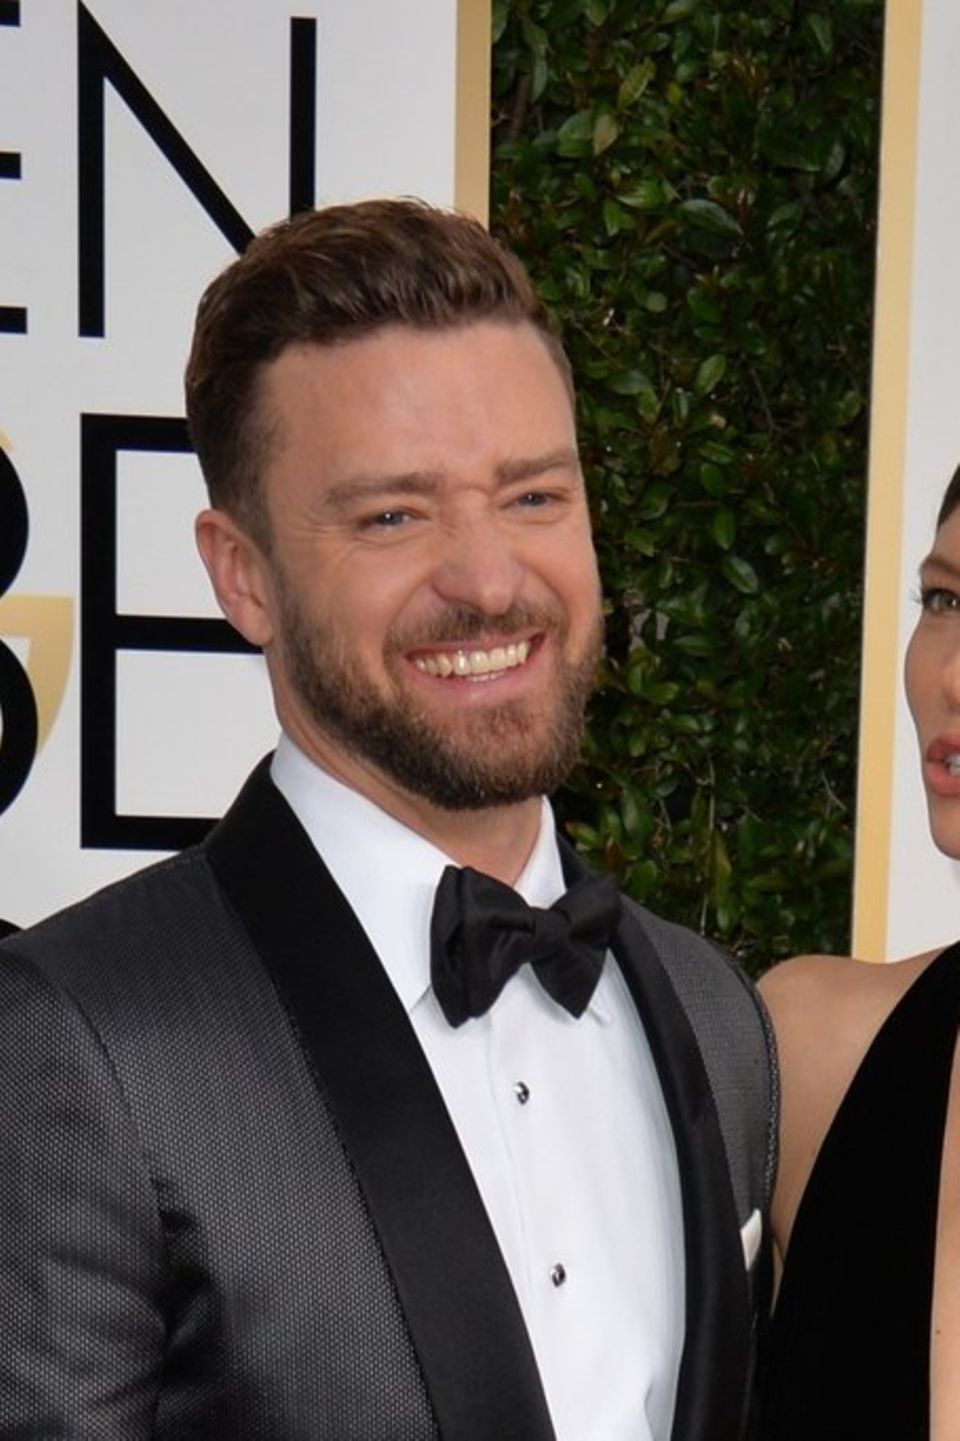 Jessica Biel mit ihrem Ehemann Justin Timberlake.